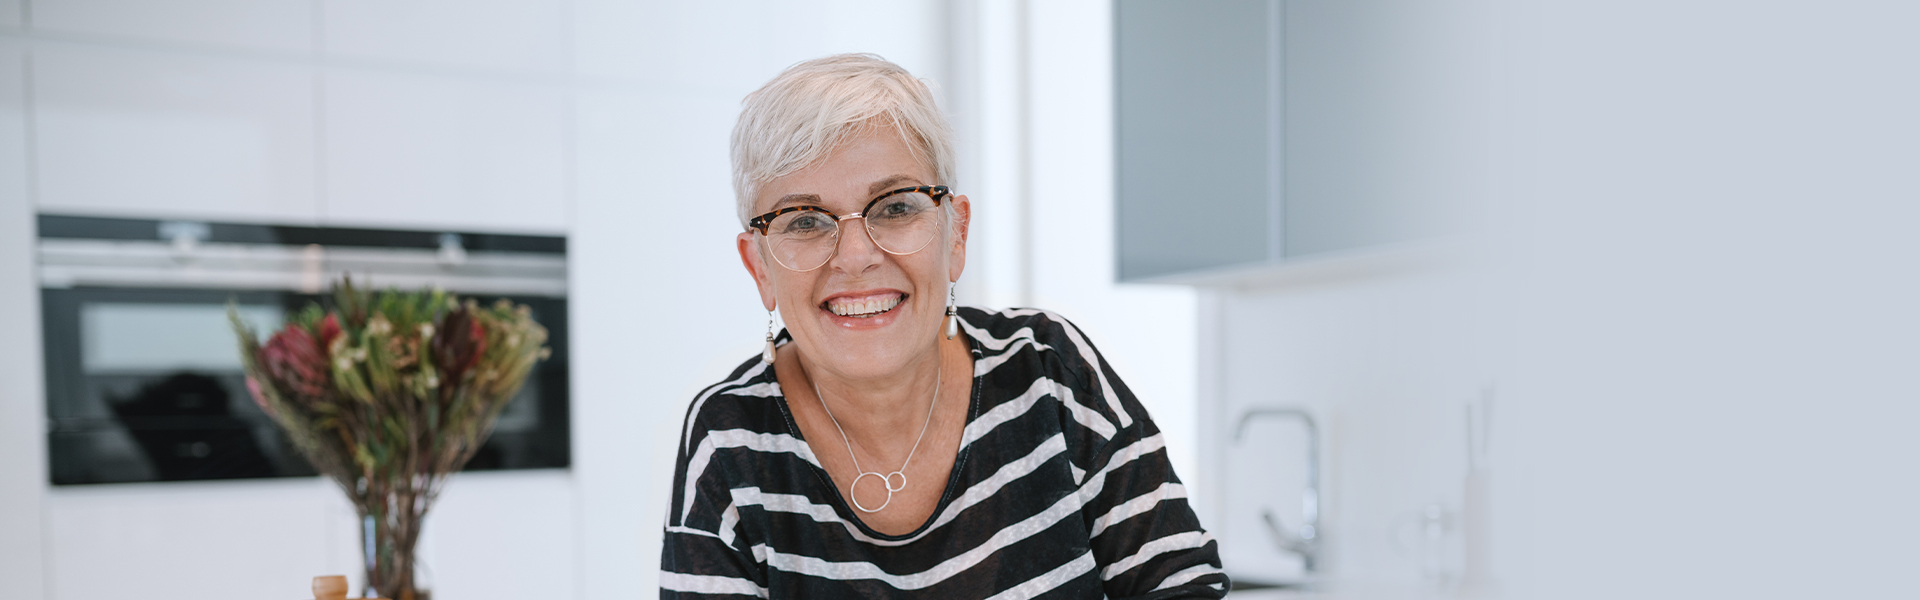 Senior Dental Care: The Importance of Regular Checkups for Older Adults